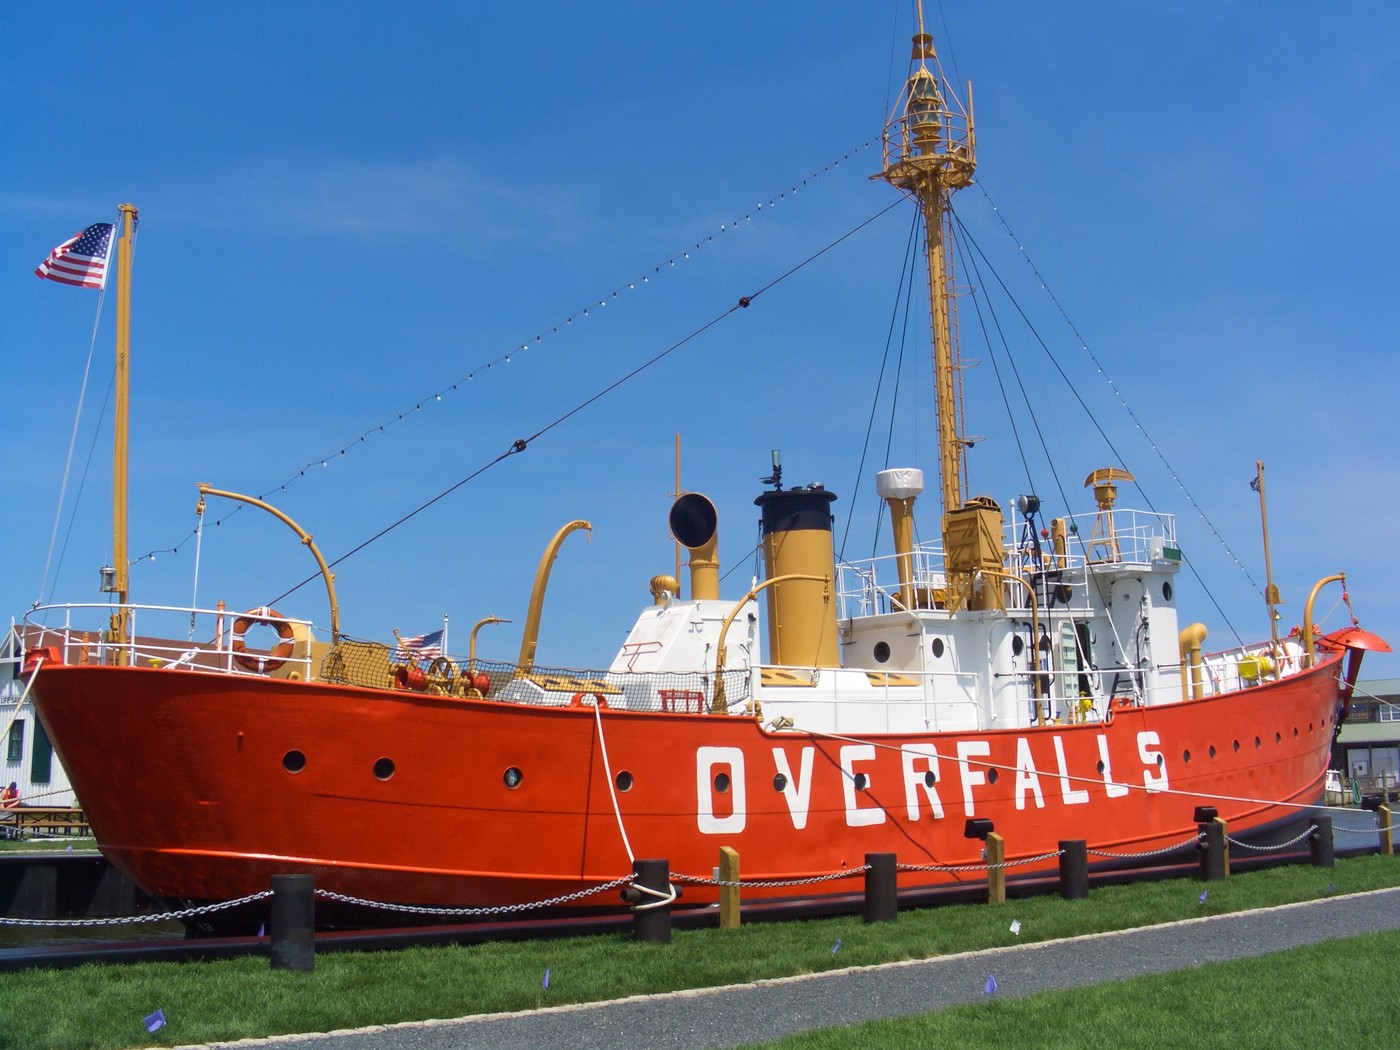 Overfalls LV-118 American Lighting Ship - Maritime Goods